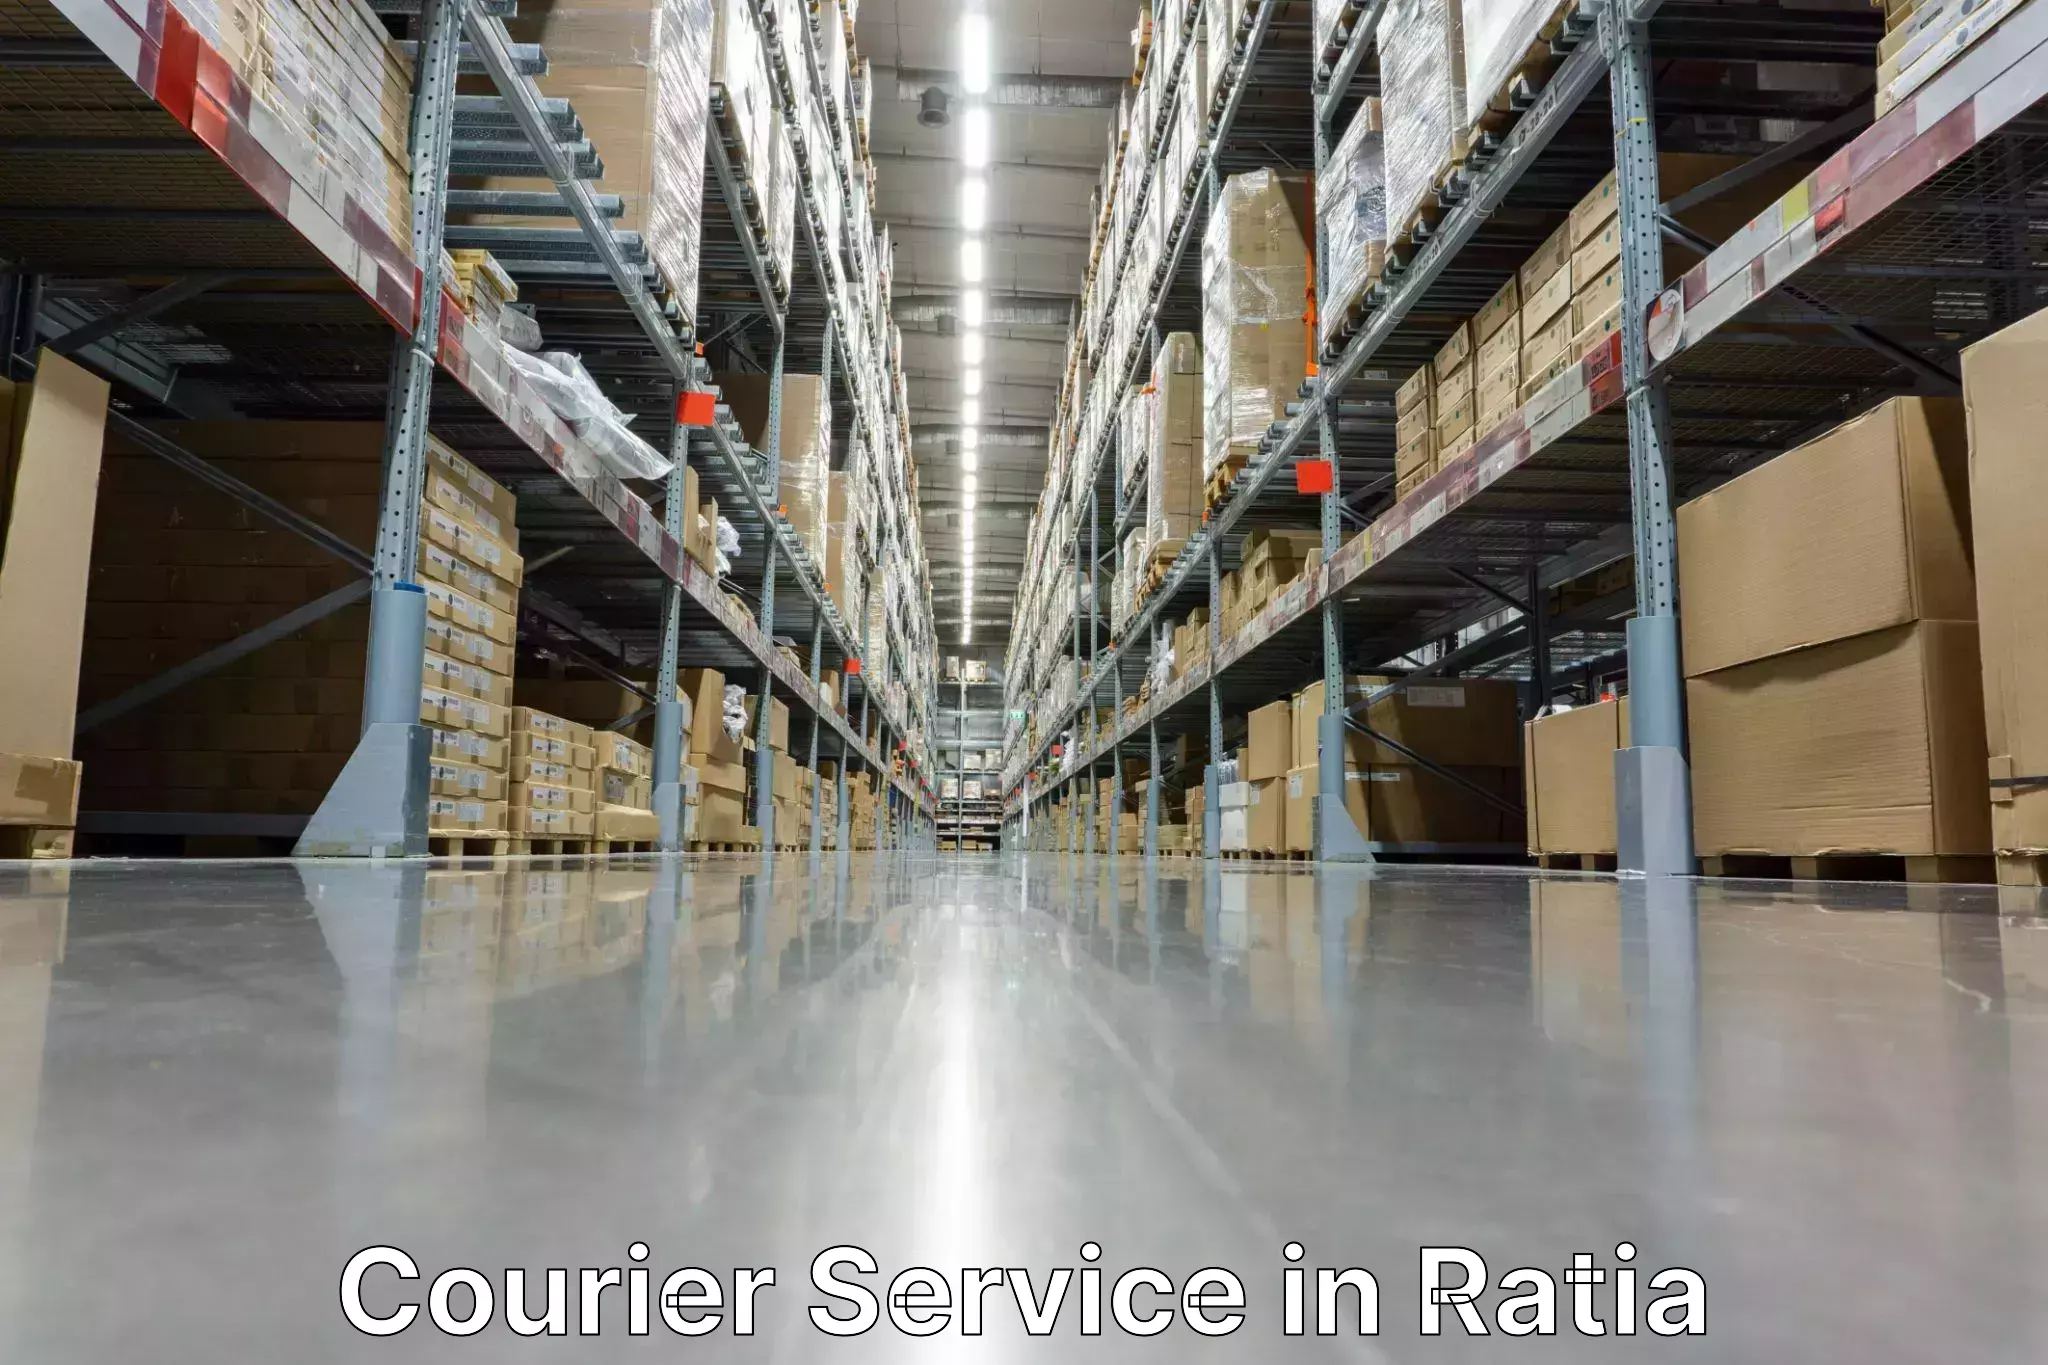 Efficient freight service in Ratia